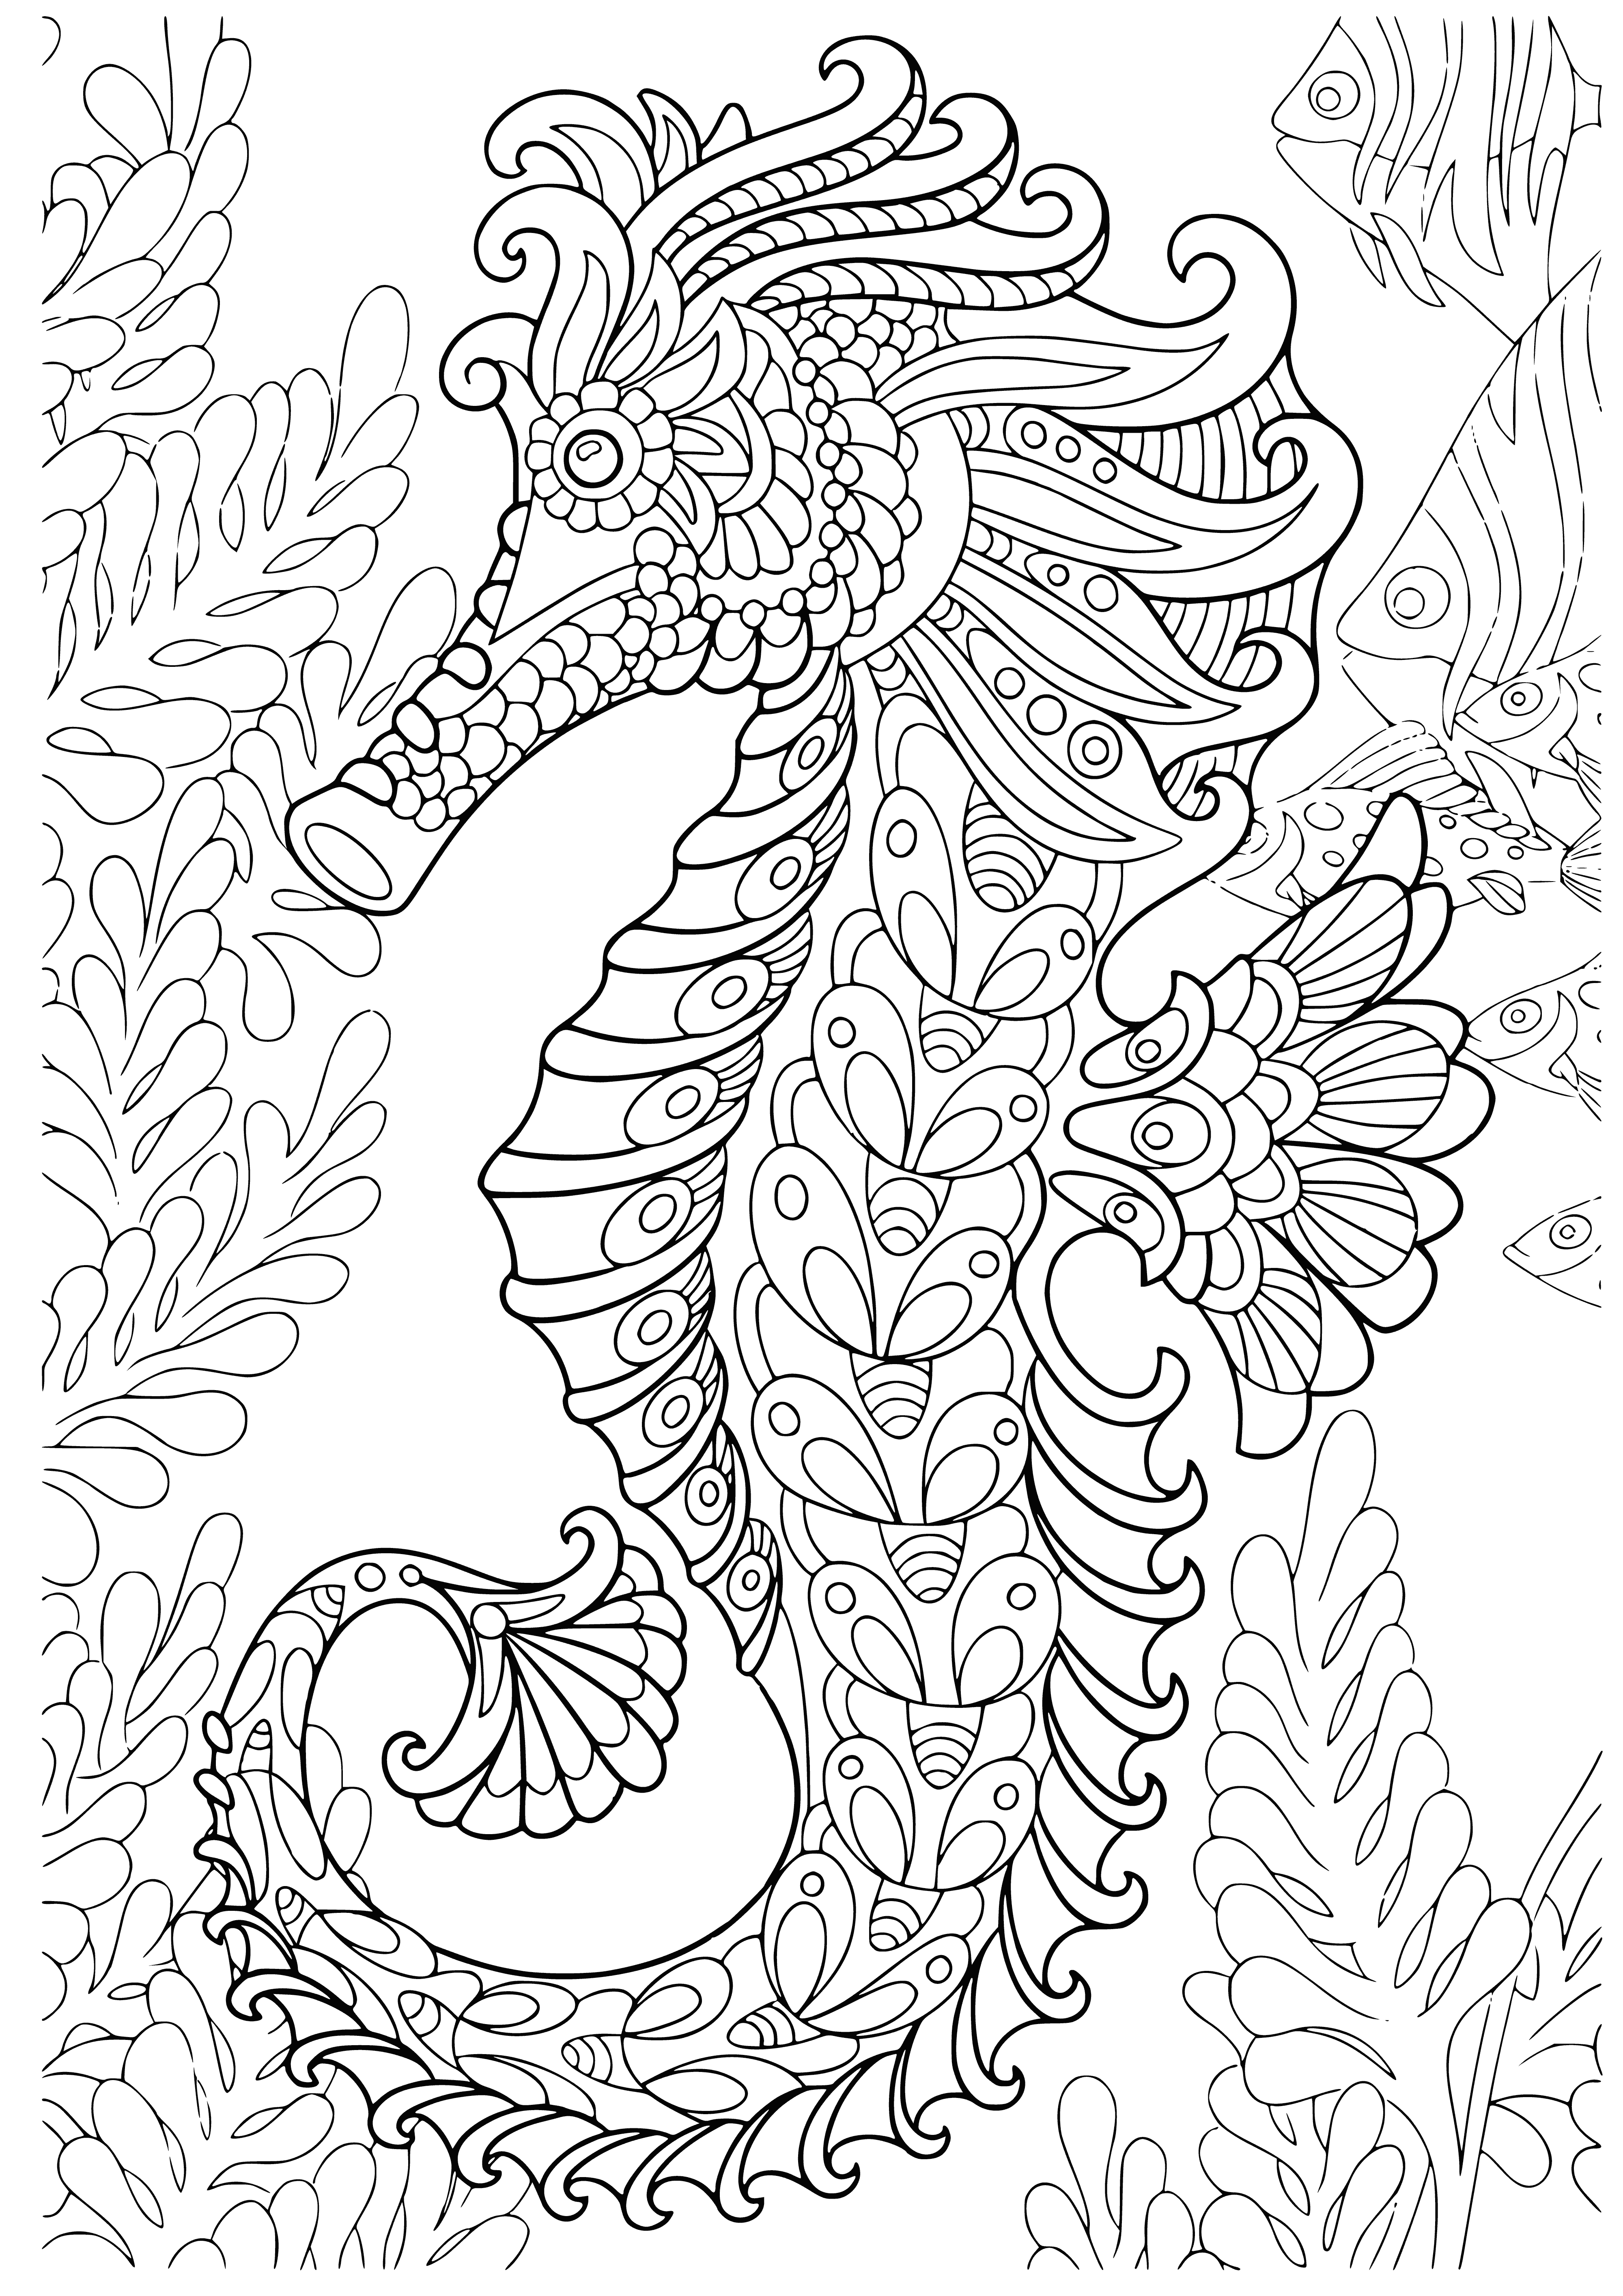 Sea Horse coloring page